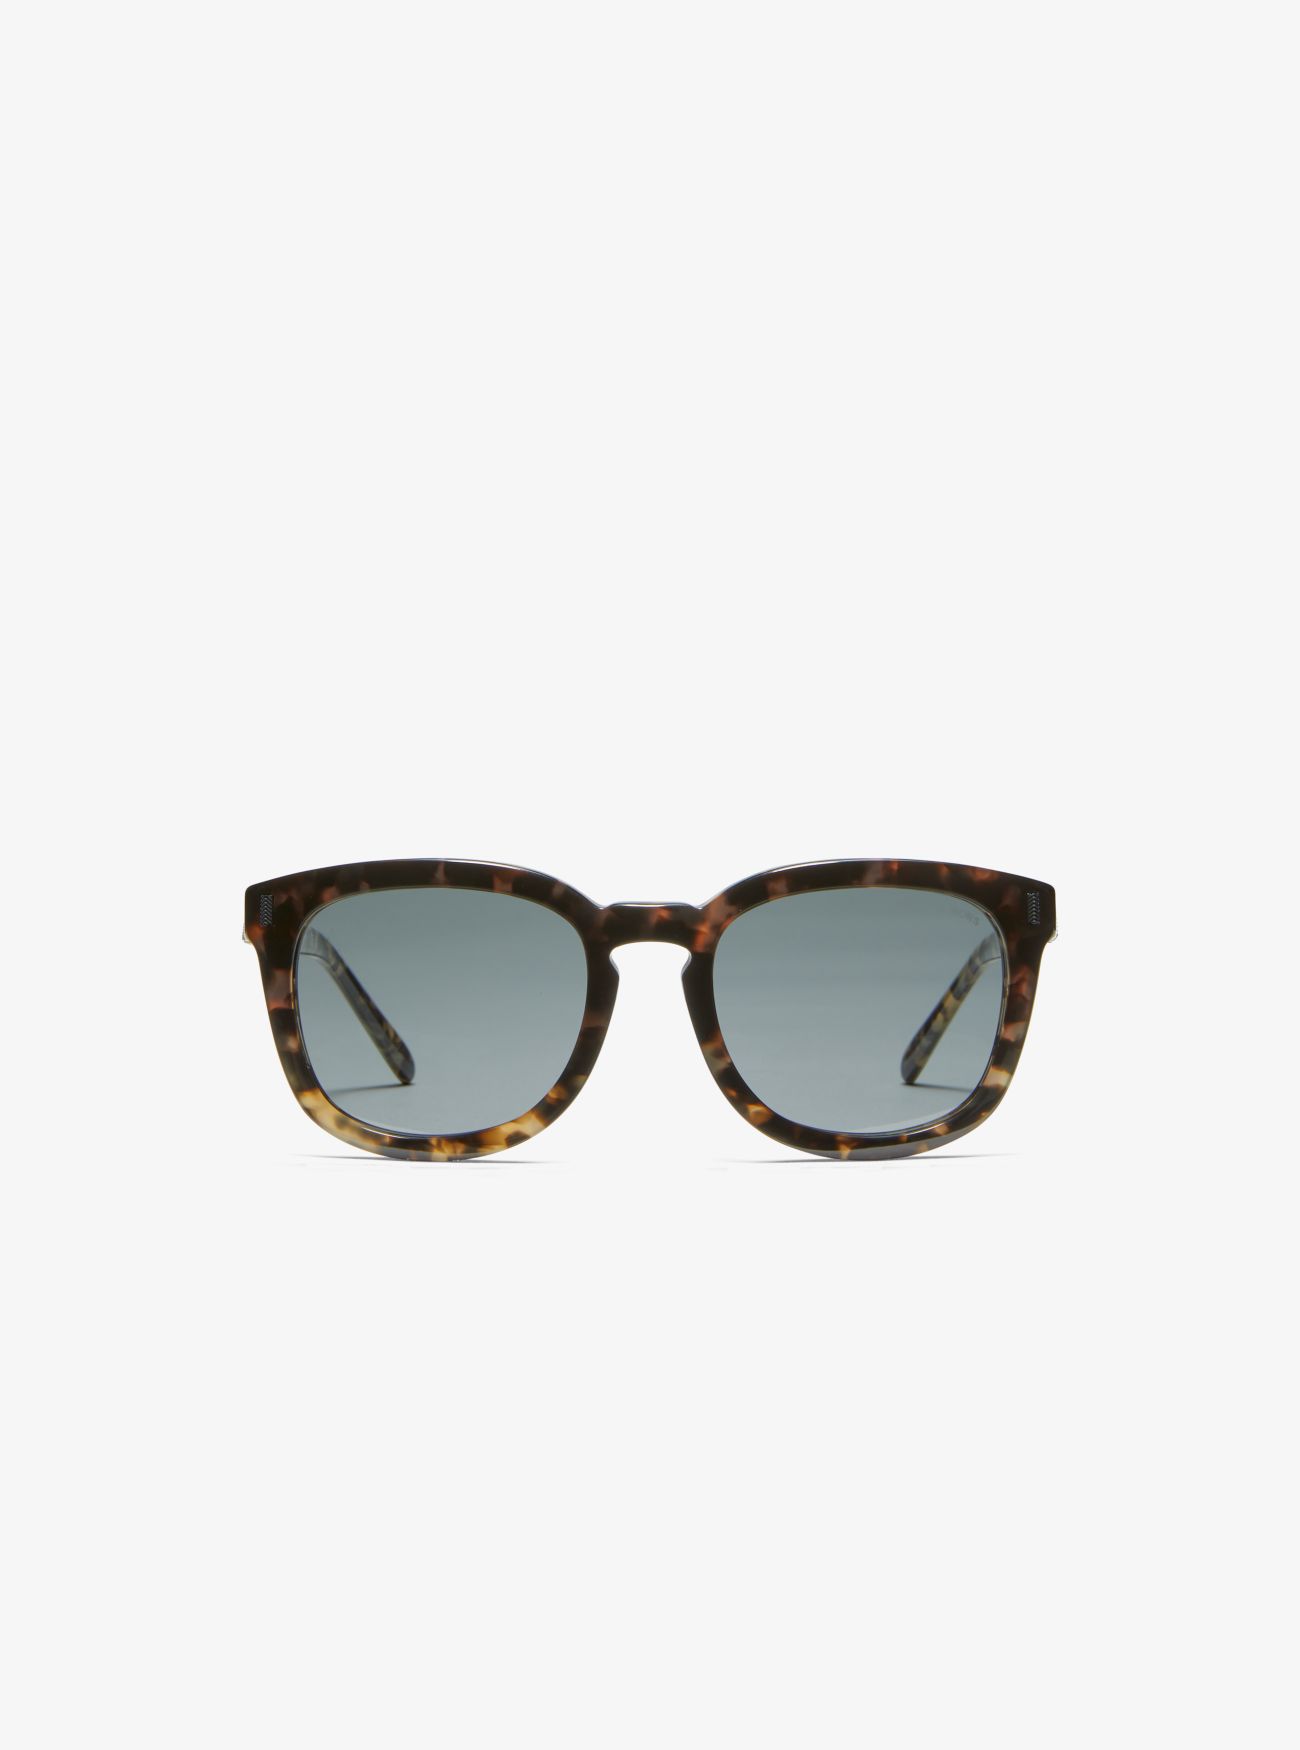 MK Grand Teton Sunglasses - Grey/black - Michael Kors